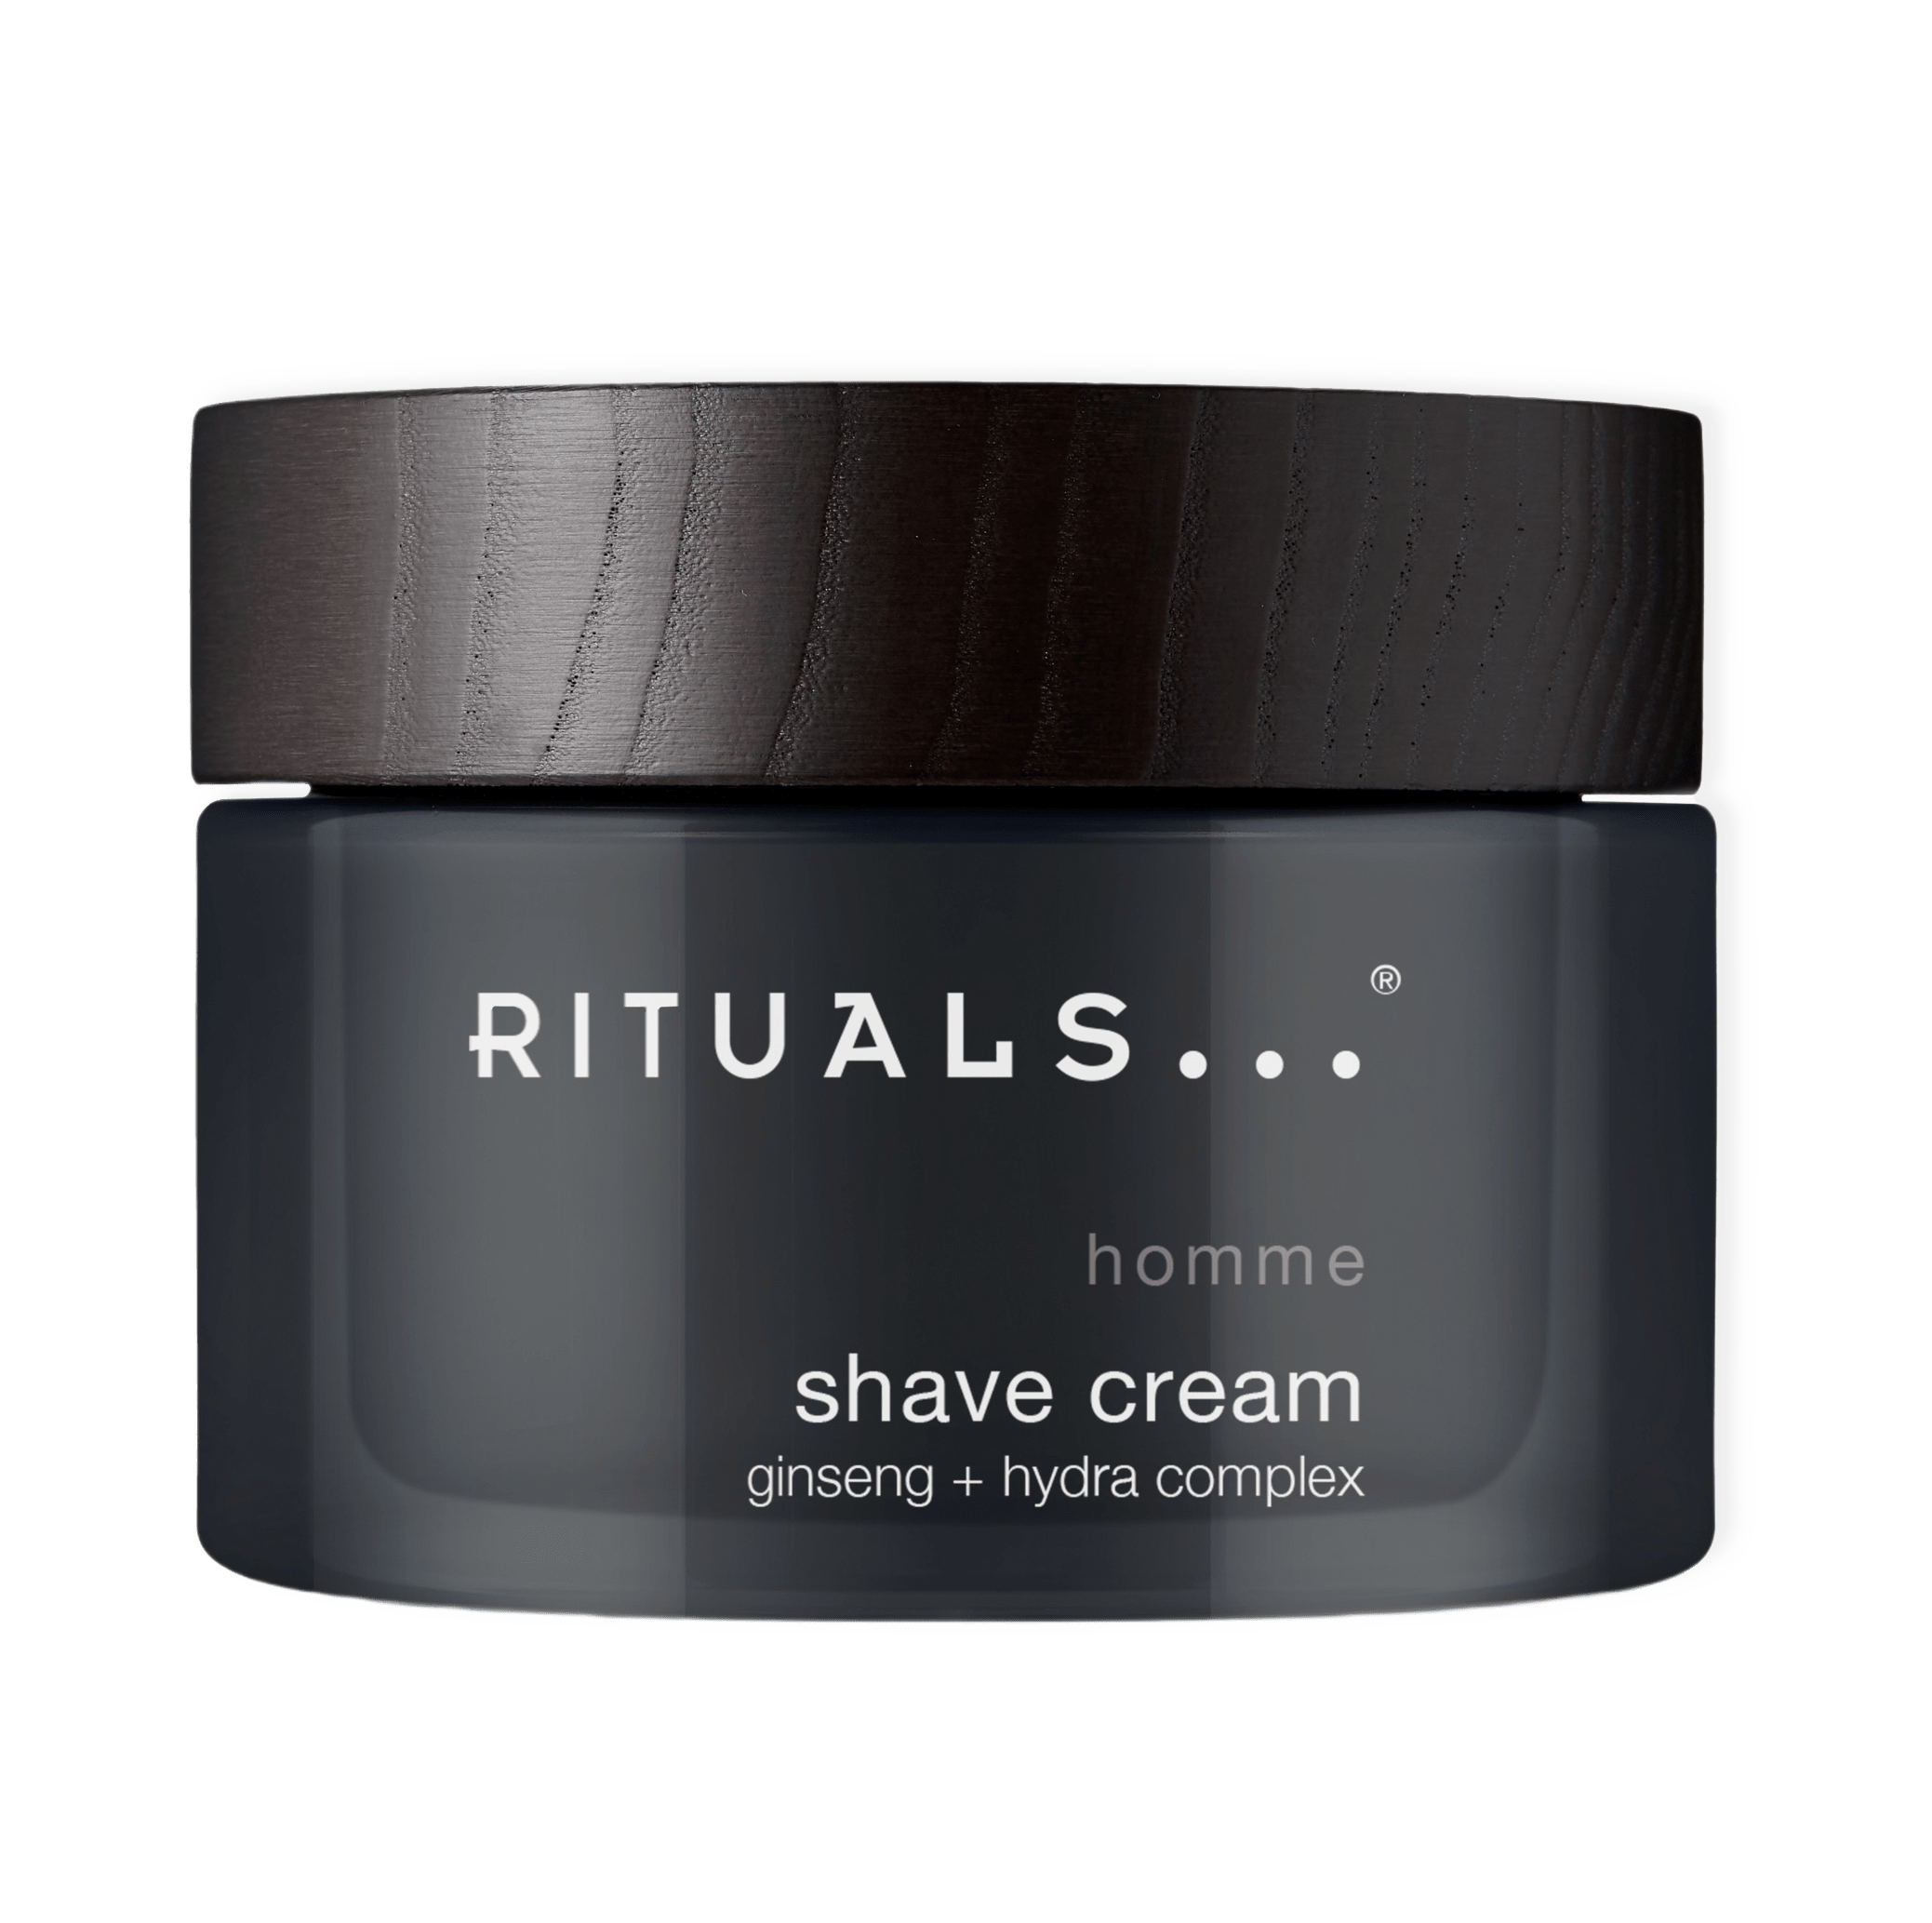 Homme Shave Cream från Rituals